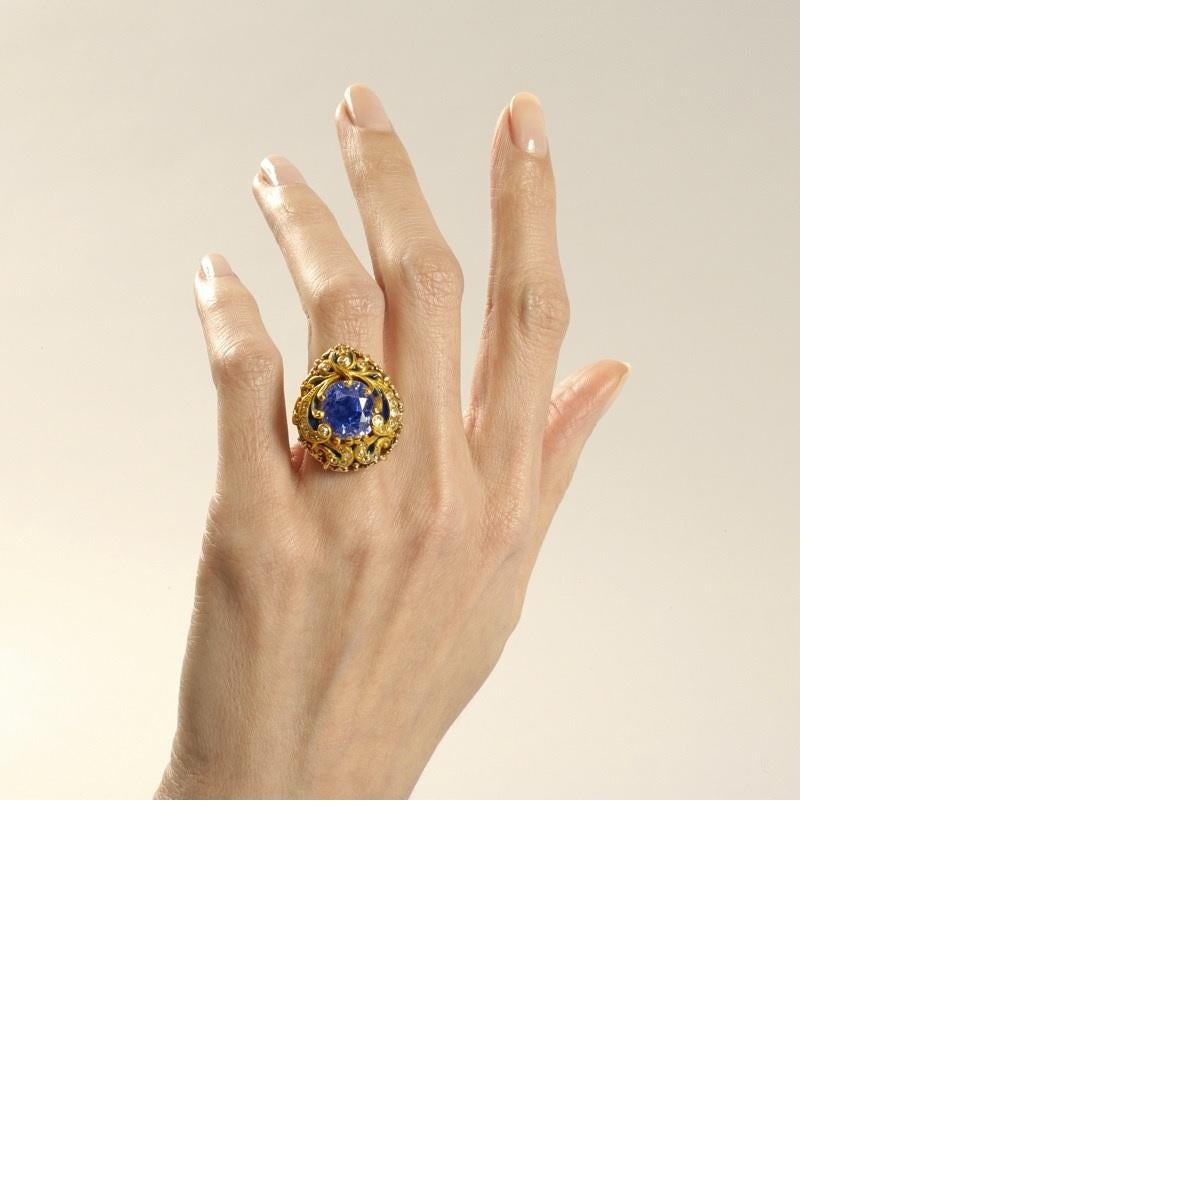 Women's Marcus & Company Art Nouveau Sapphire, Diamond, Gold and Enamel Ring